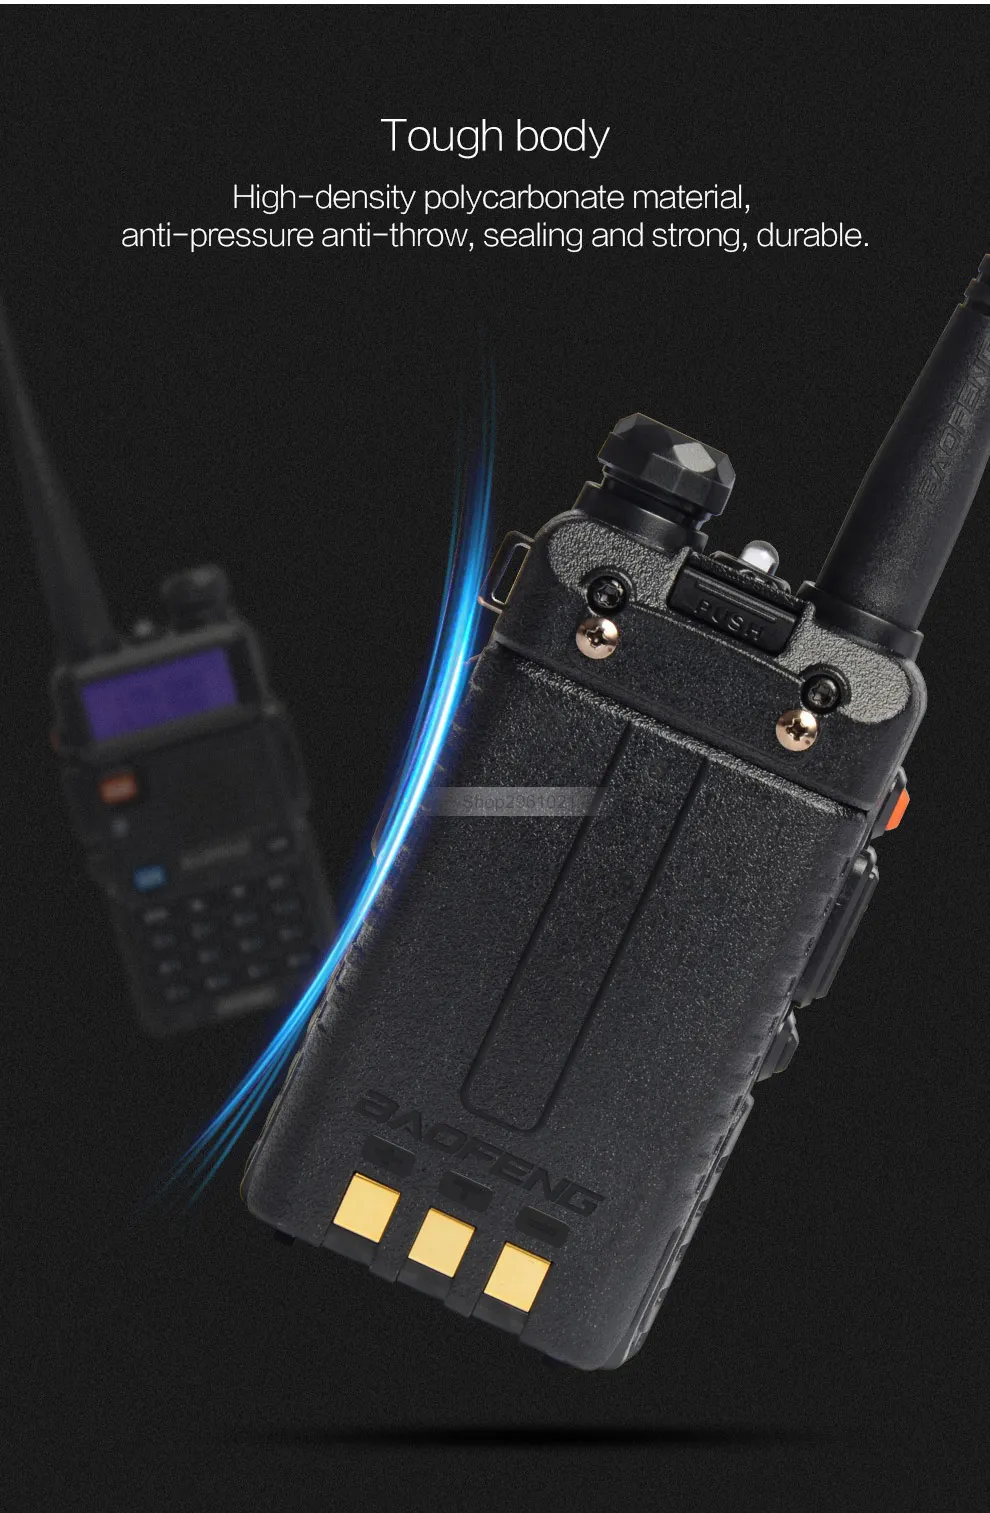 BAOFENG UV-5R рация 8 Вт UHF VHF Двухдиапазонная 1800 мАч UV5R портативная Baofeng рация 5R двухсторонняя CB Ham радио